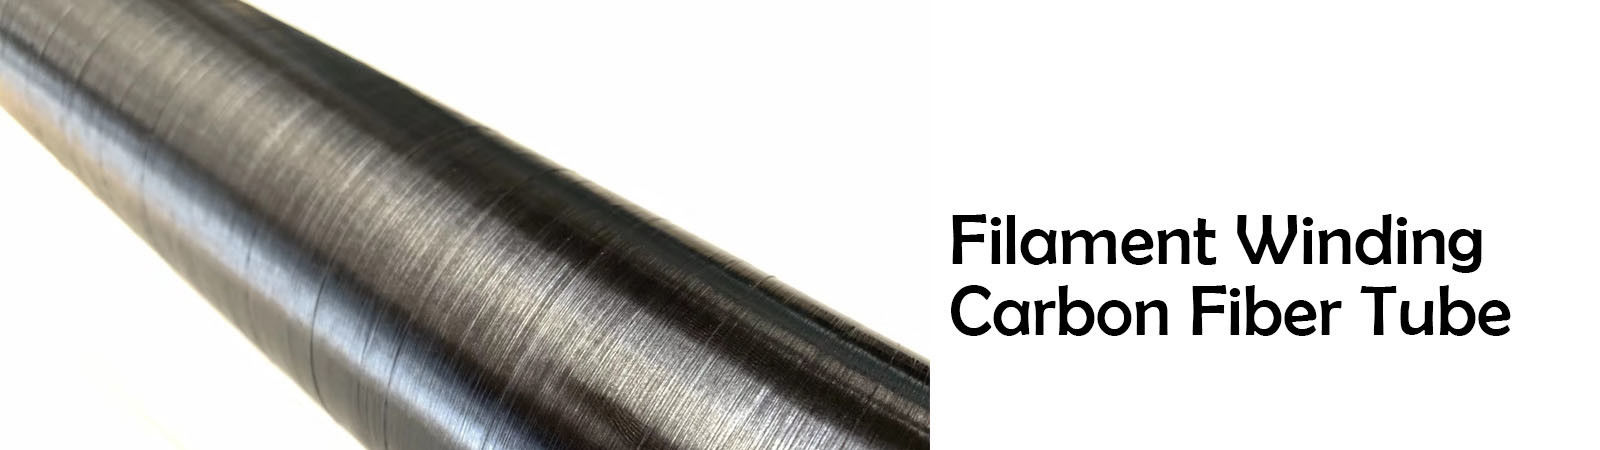 Tubo de la fibra de carbono de la herida del filamento